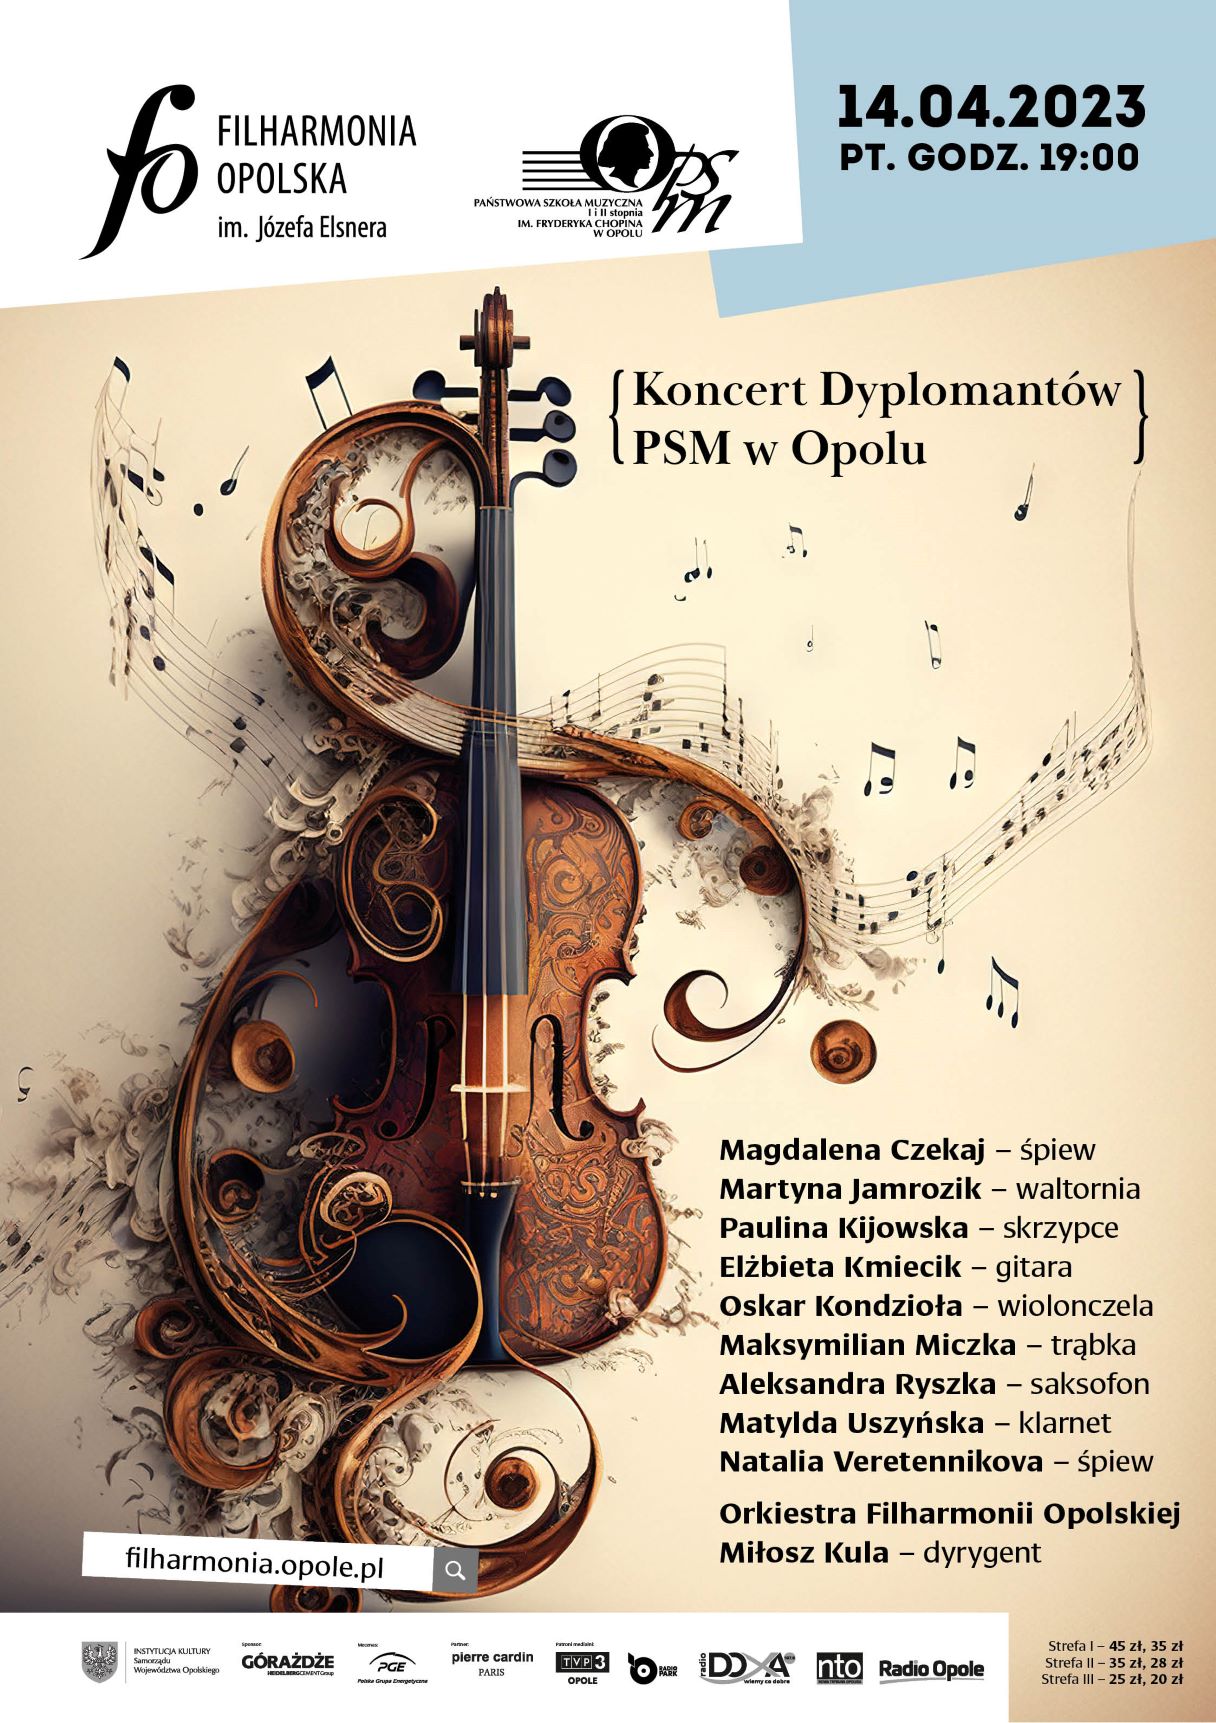 Plakat promujący koncert dyplomantów